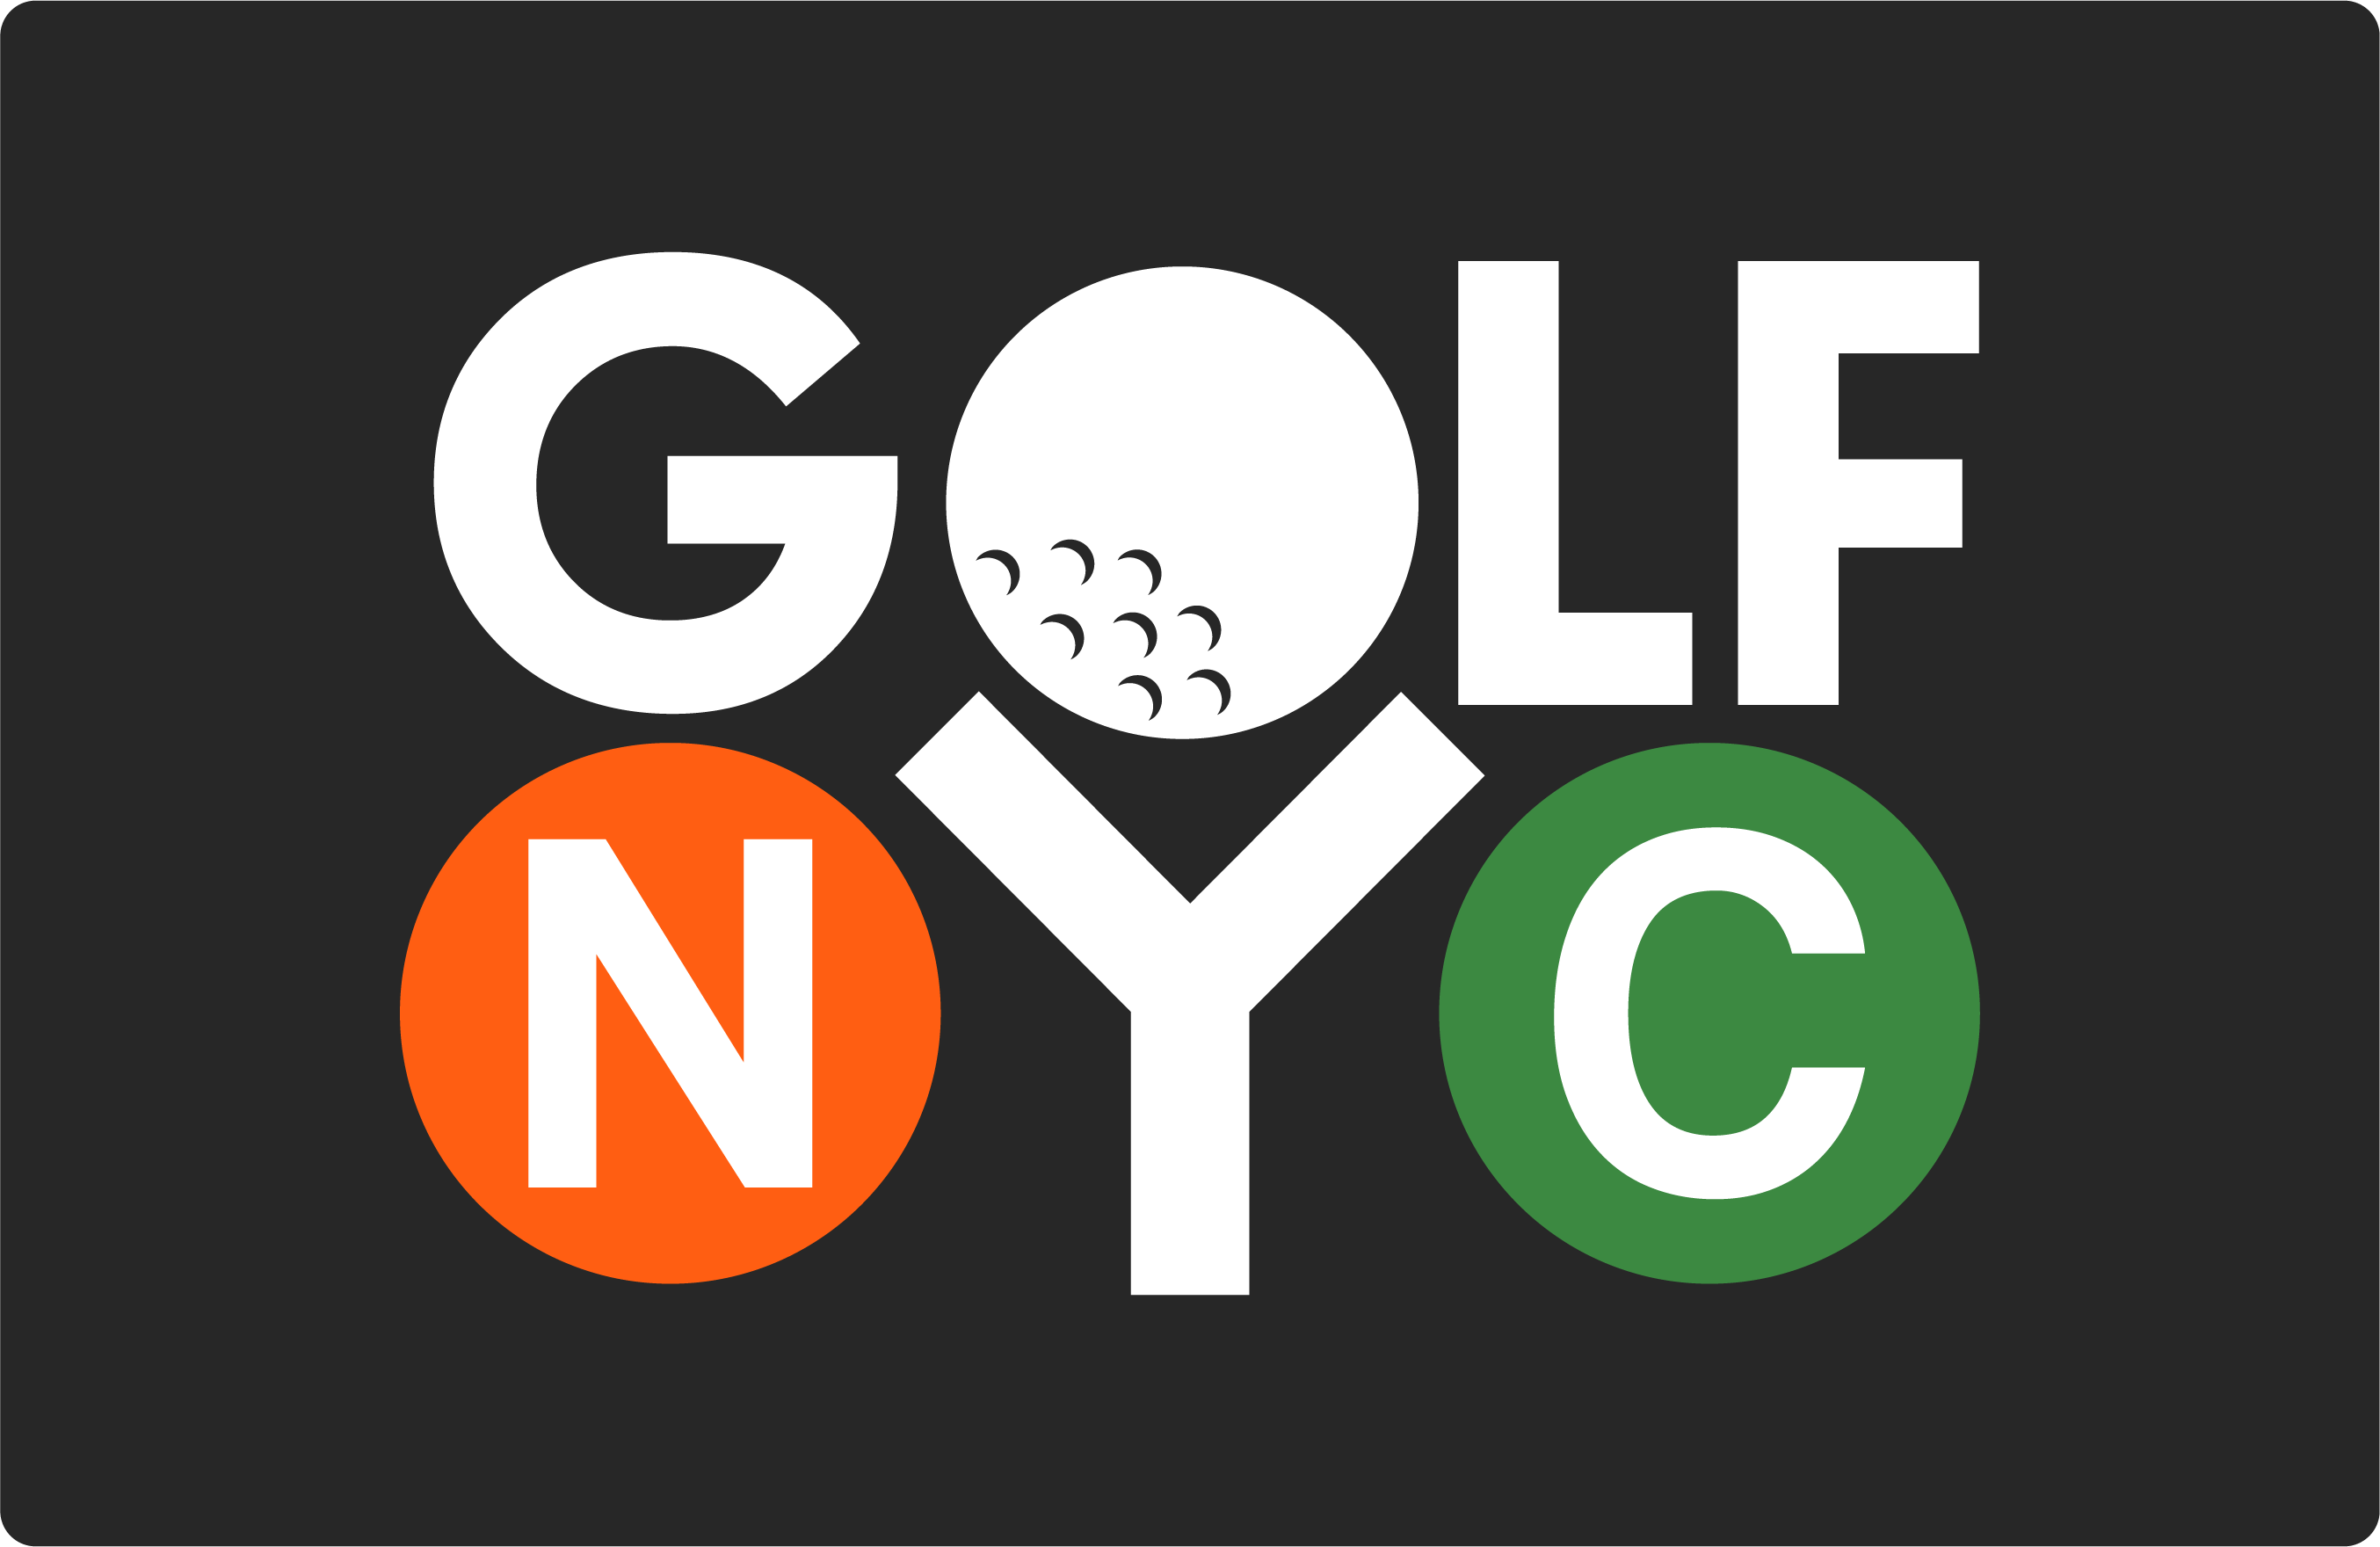 Van Cortlandt Park Golf Course, New York - Times of India Travel